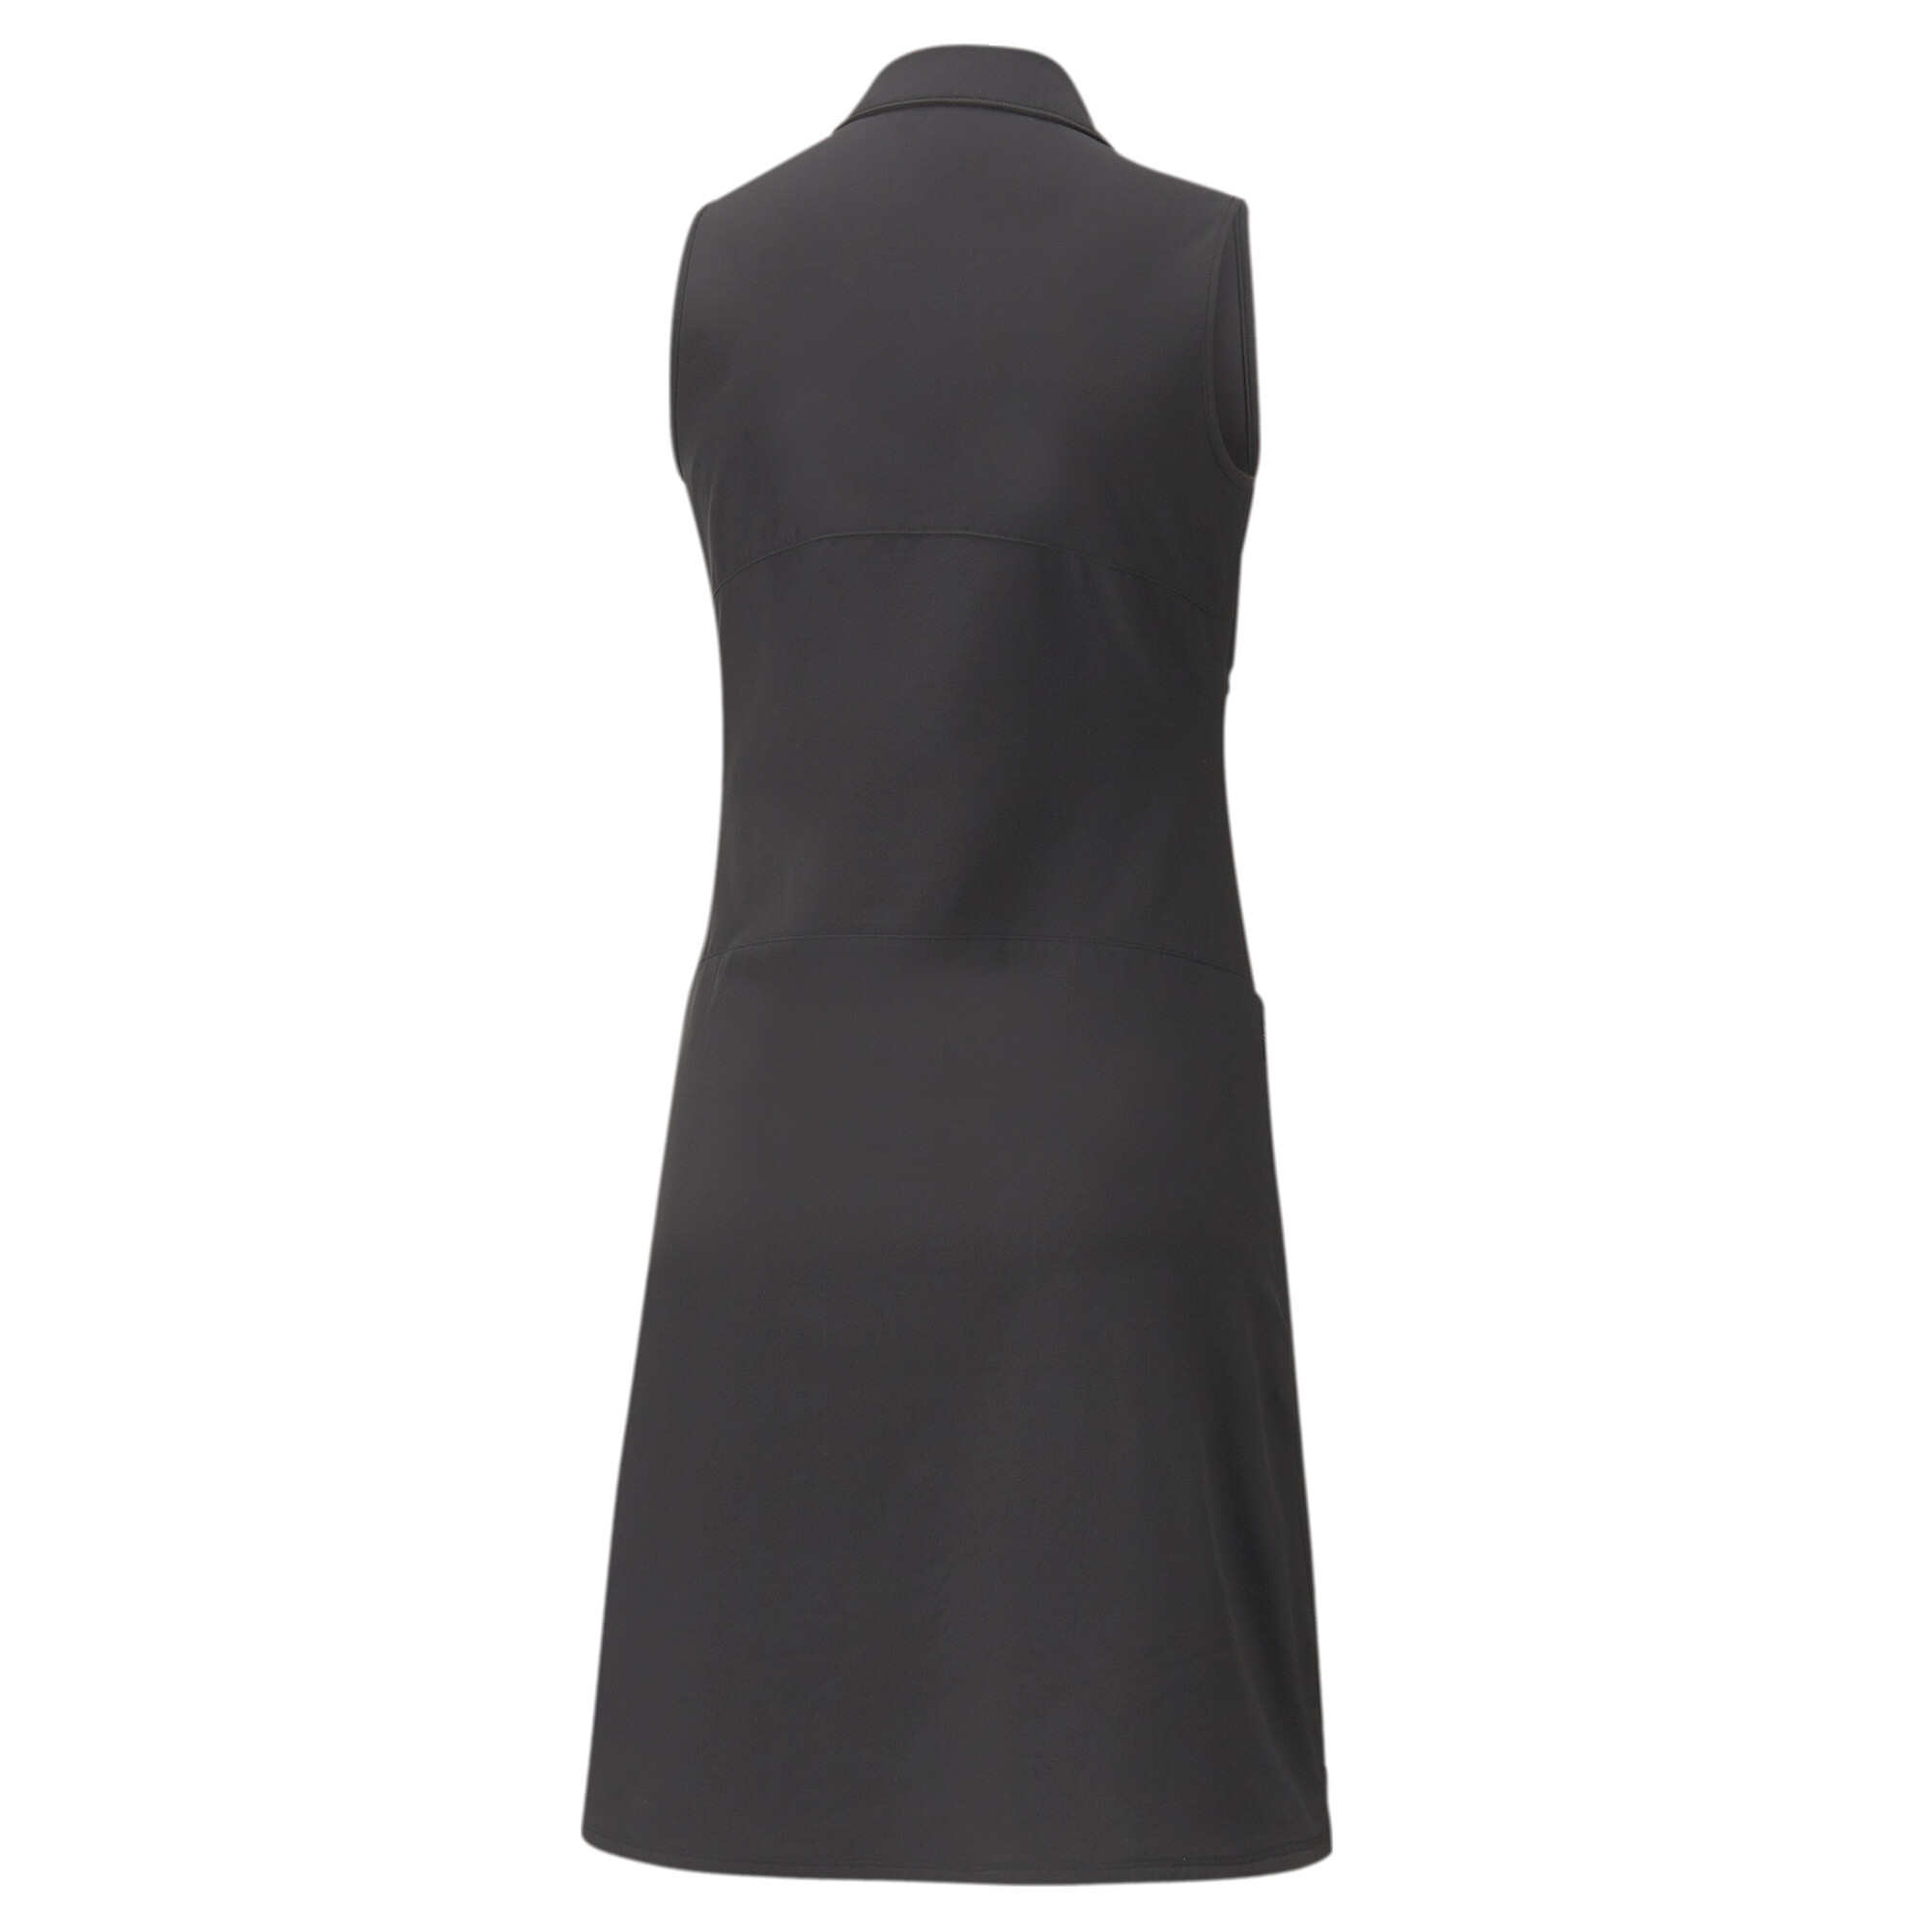 Women's Puma Cruise's Golf Dress, Black, Size M, Clothing